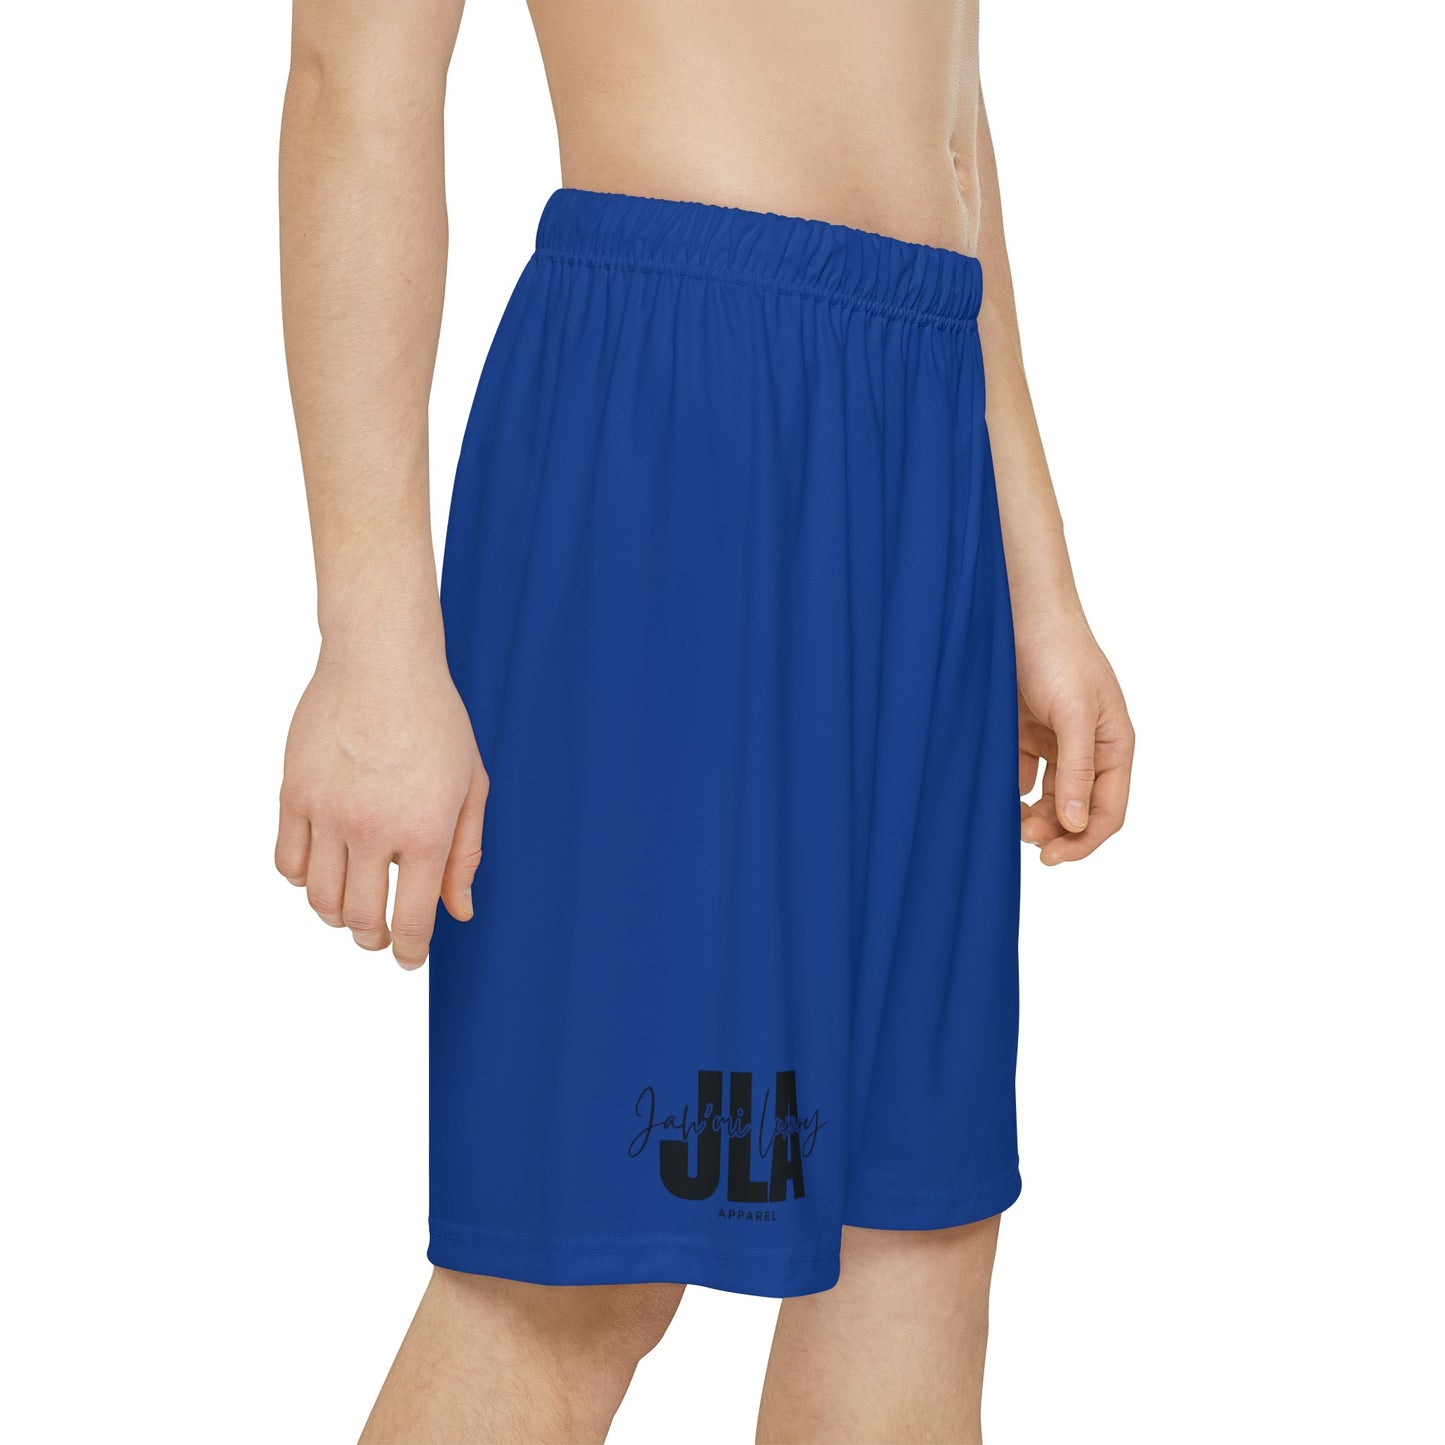 Jah’mi Luxe Men’s Basketball Shorts